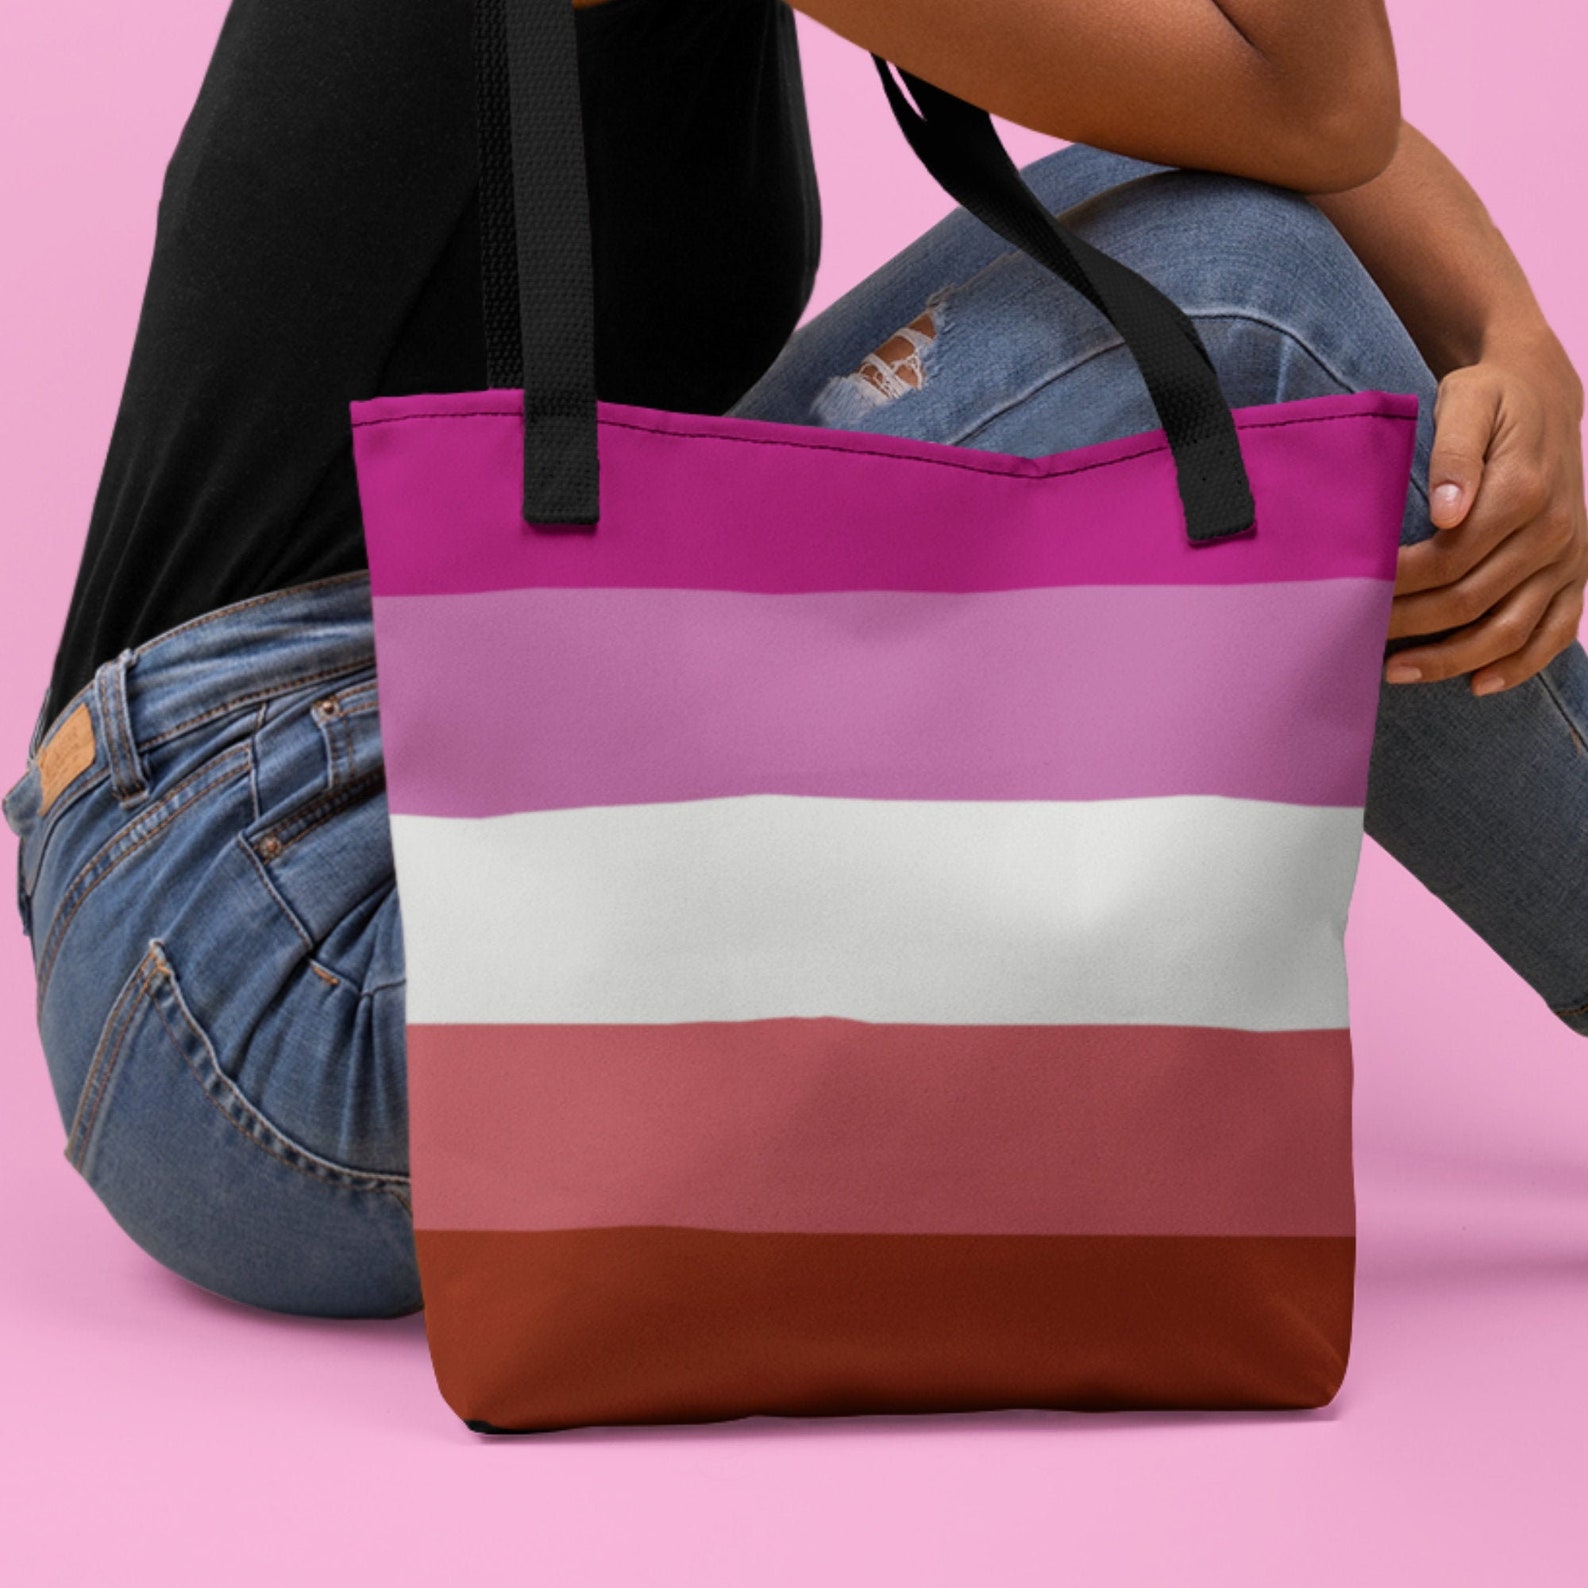 Lesbian Tote Bag Lesbian Pride Bag Lesbian Flag Bag Pride Etsy